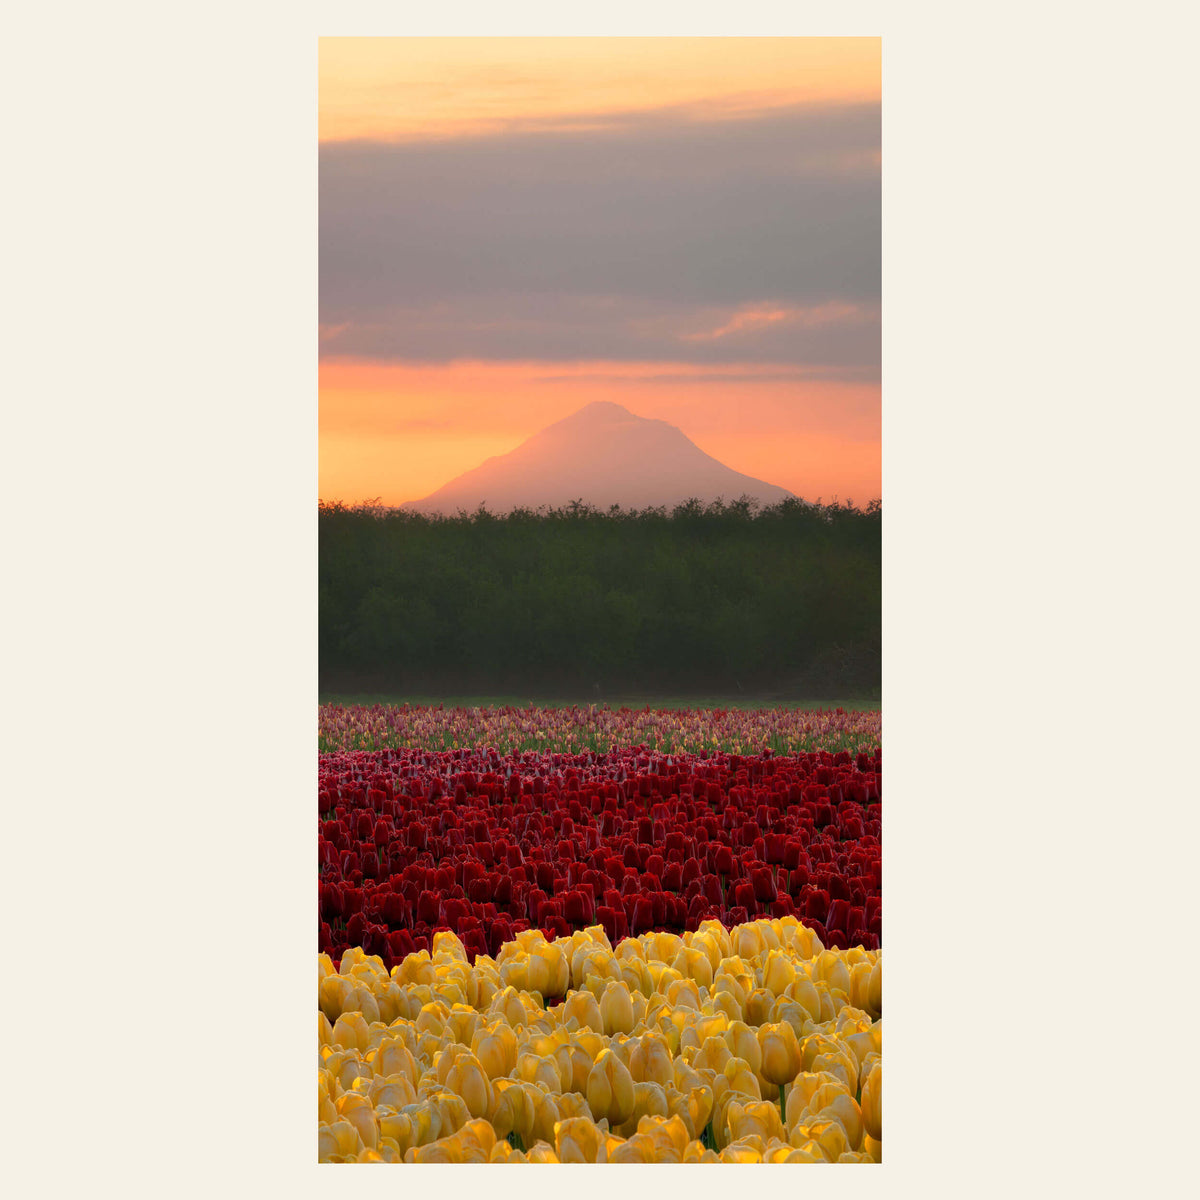 A sunrise picture from Wooden Shoe Tulip Farm near Mount Hood, Oregon.